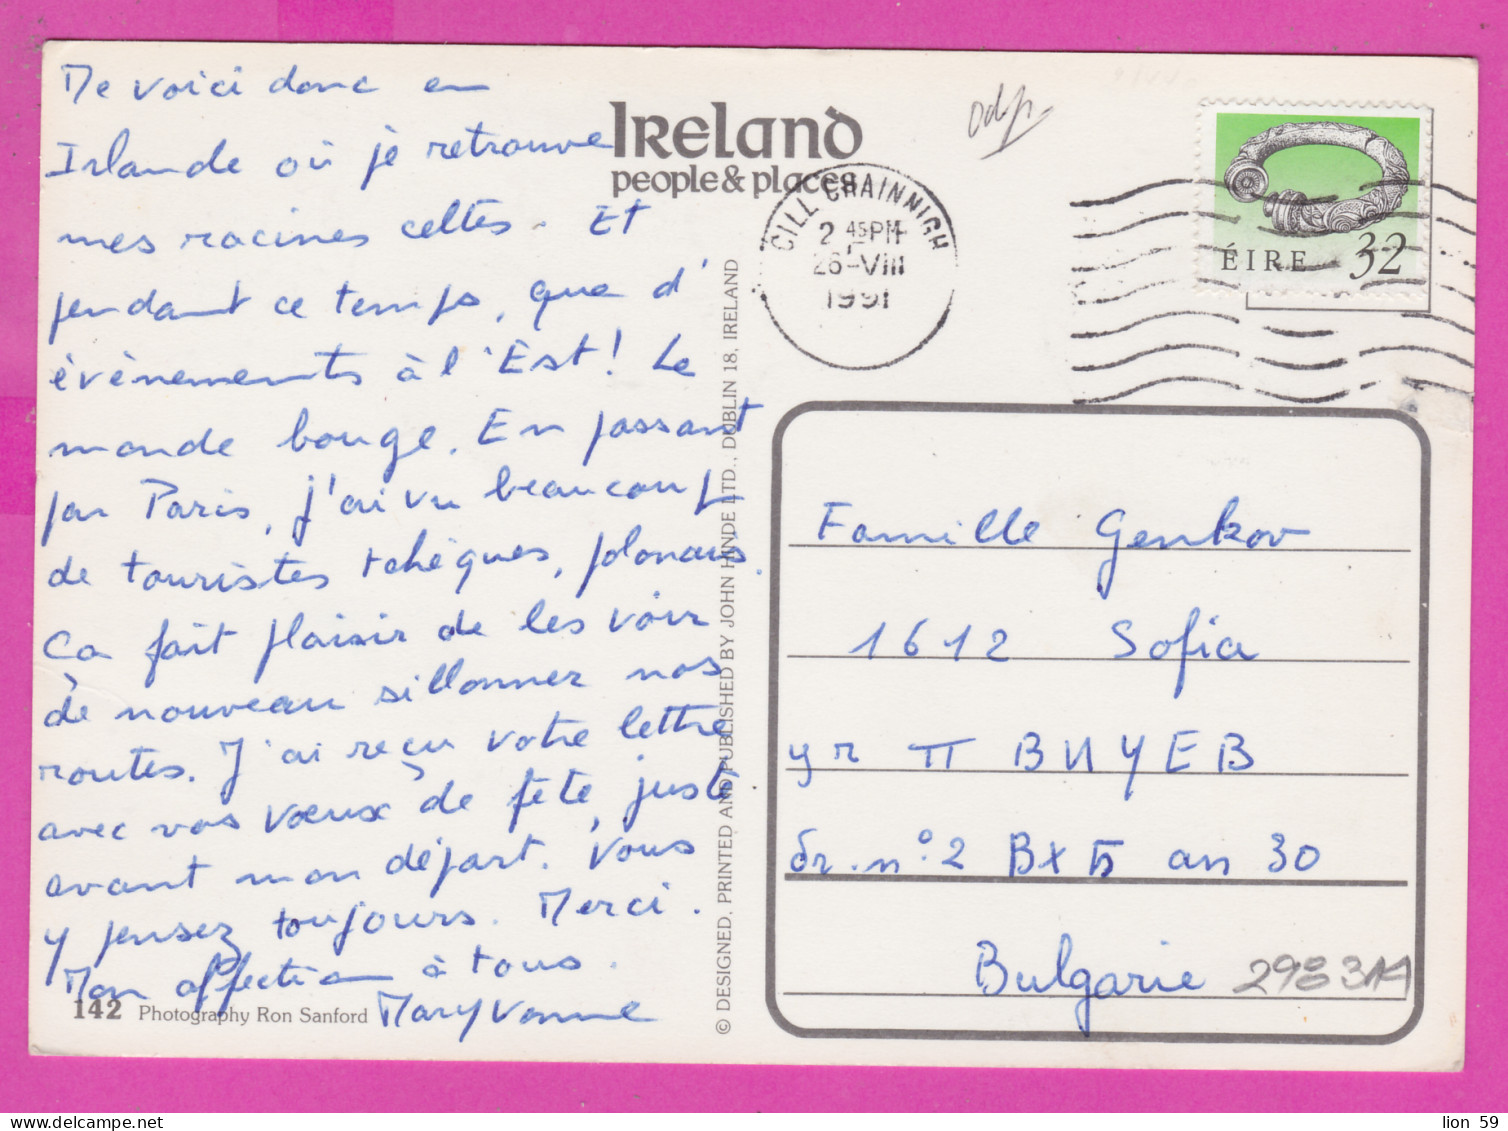 298314 / Traffic Jam - Ireland Eire , Velo Bike , Road Sheep Shepherds PC USED Cill Chainnigh  1991 - 32P Art Treasures - Collections & Lots